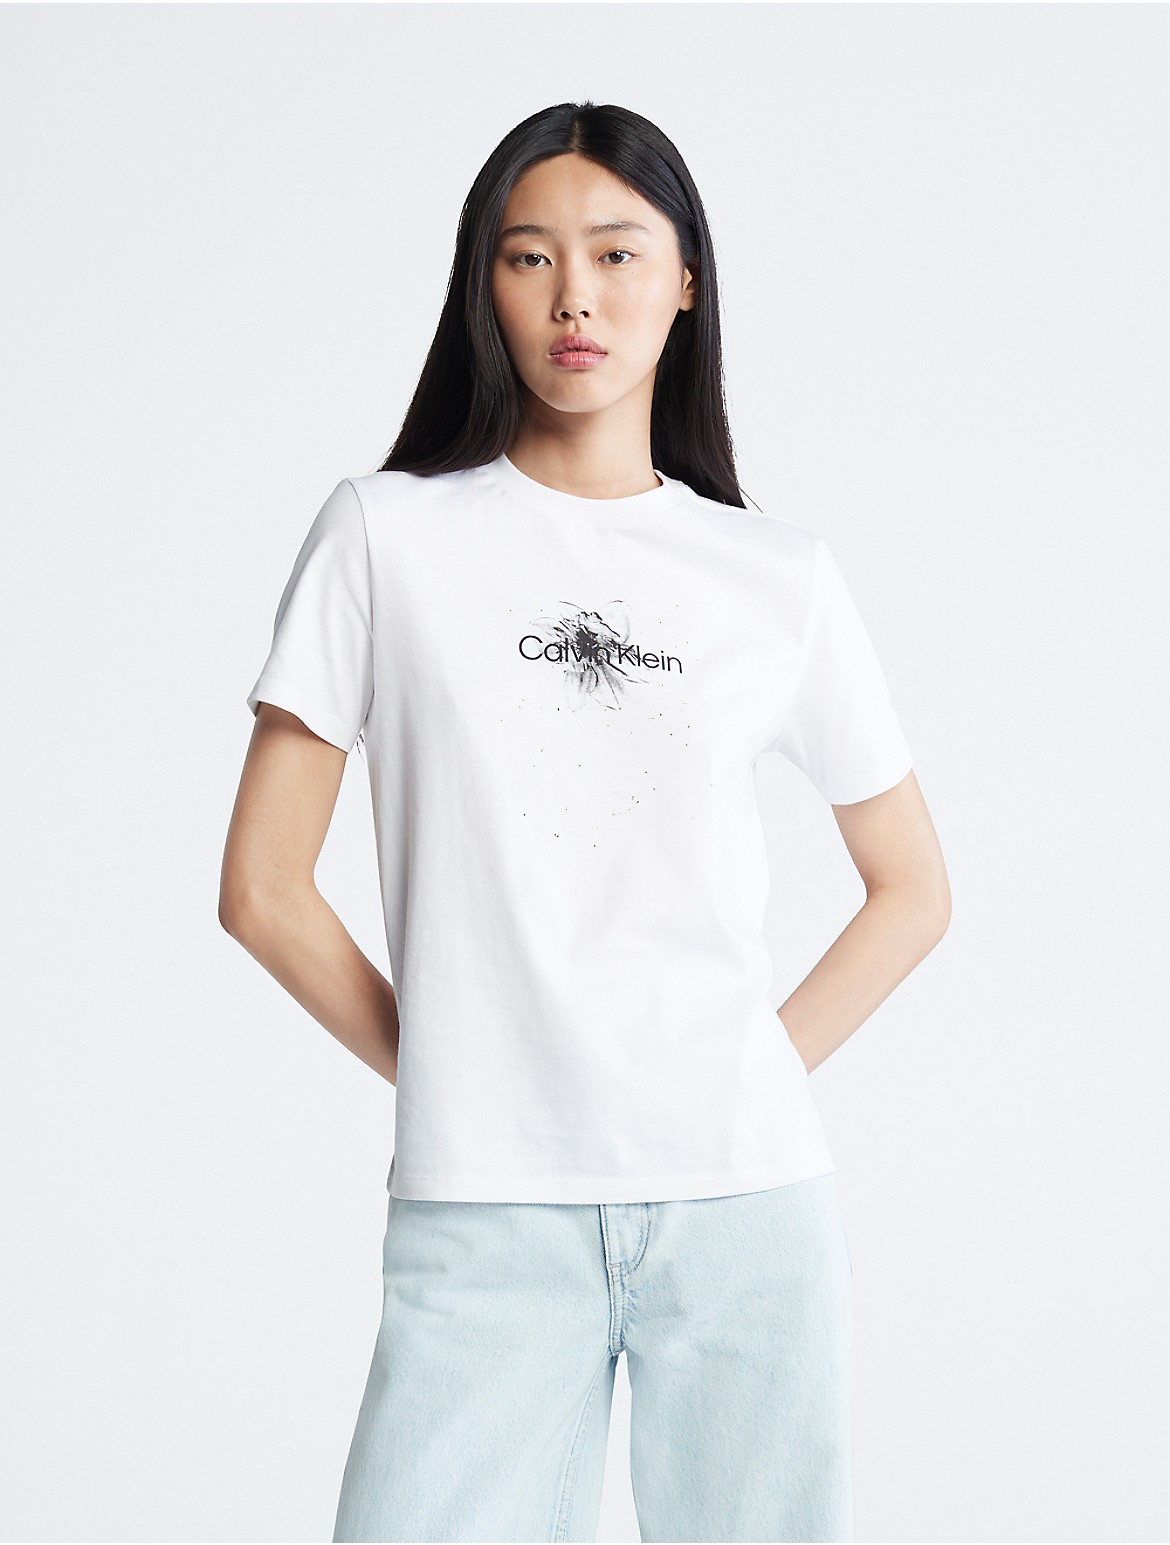 Calvin Klein Women's Floral Graphic Crewneck T-Shirt - White - M